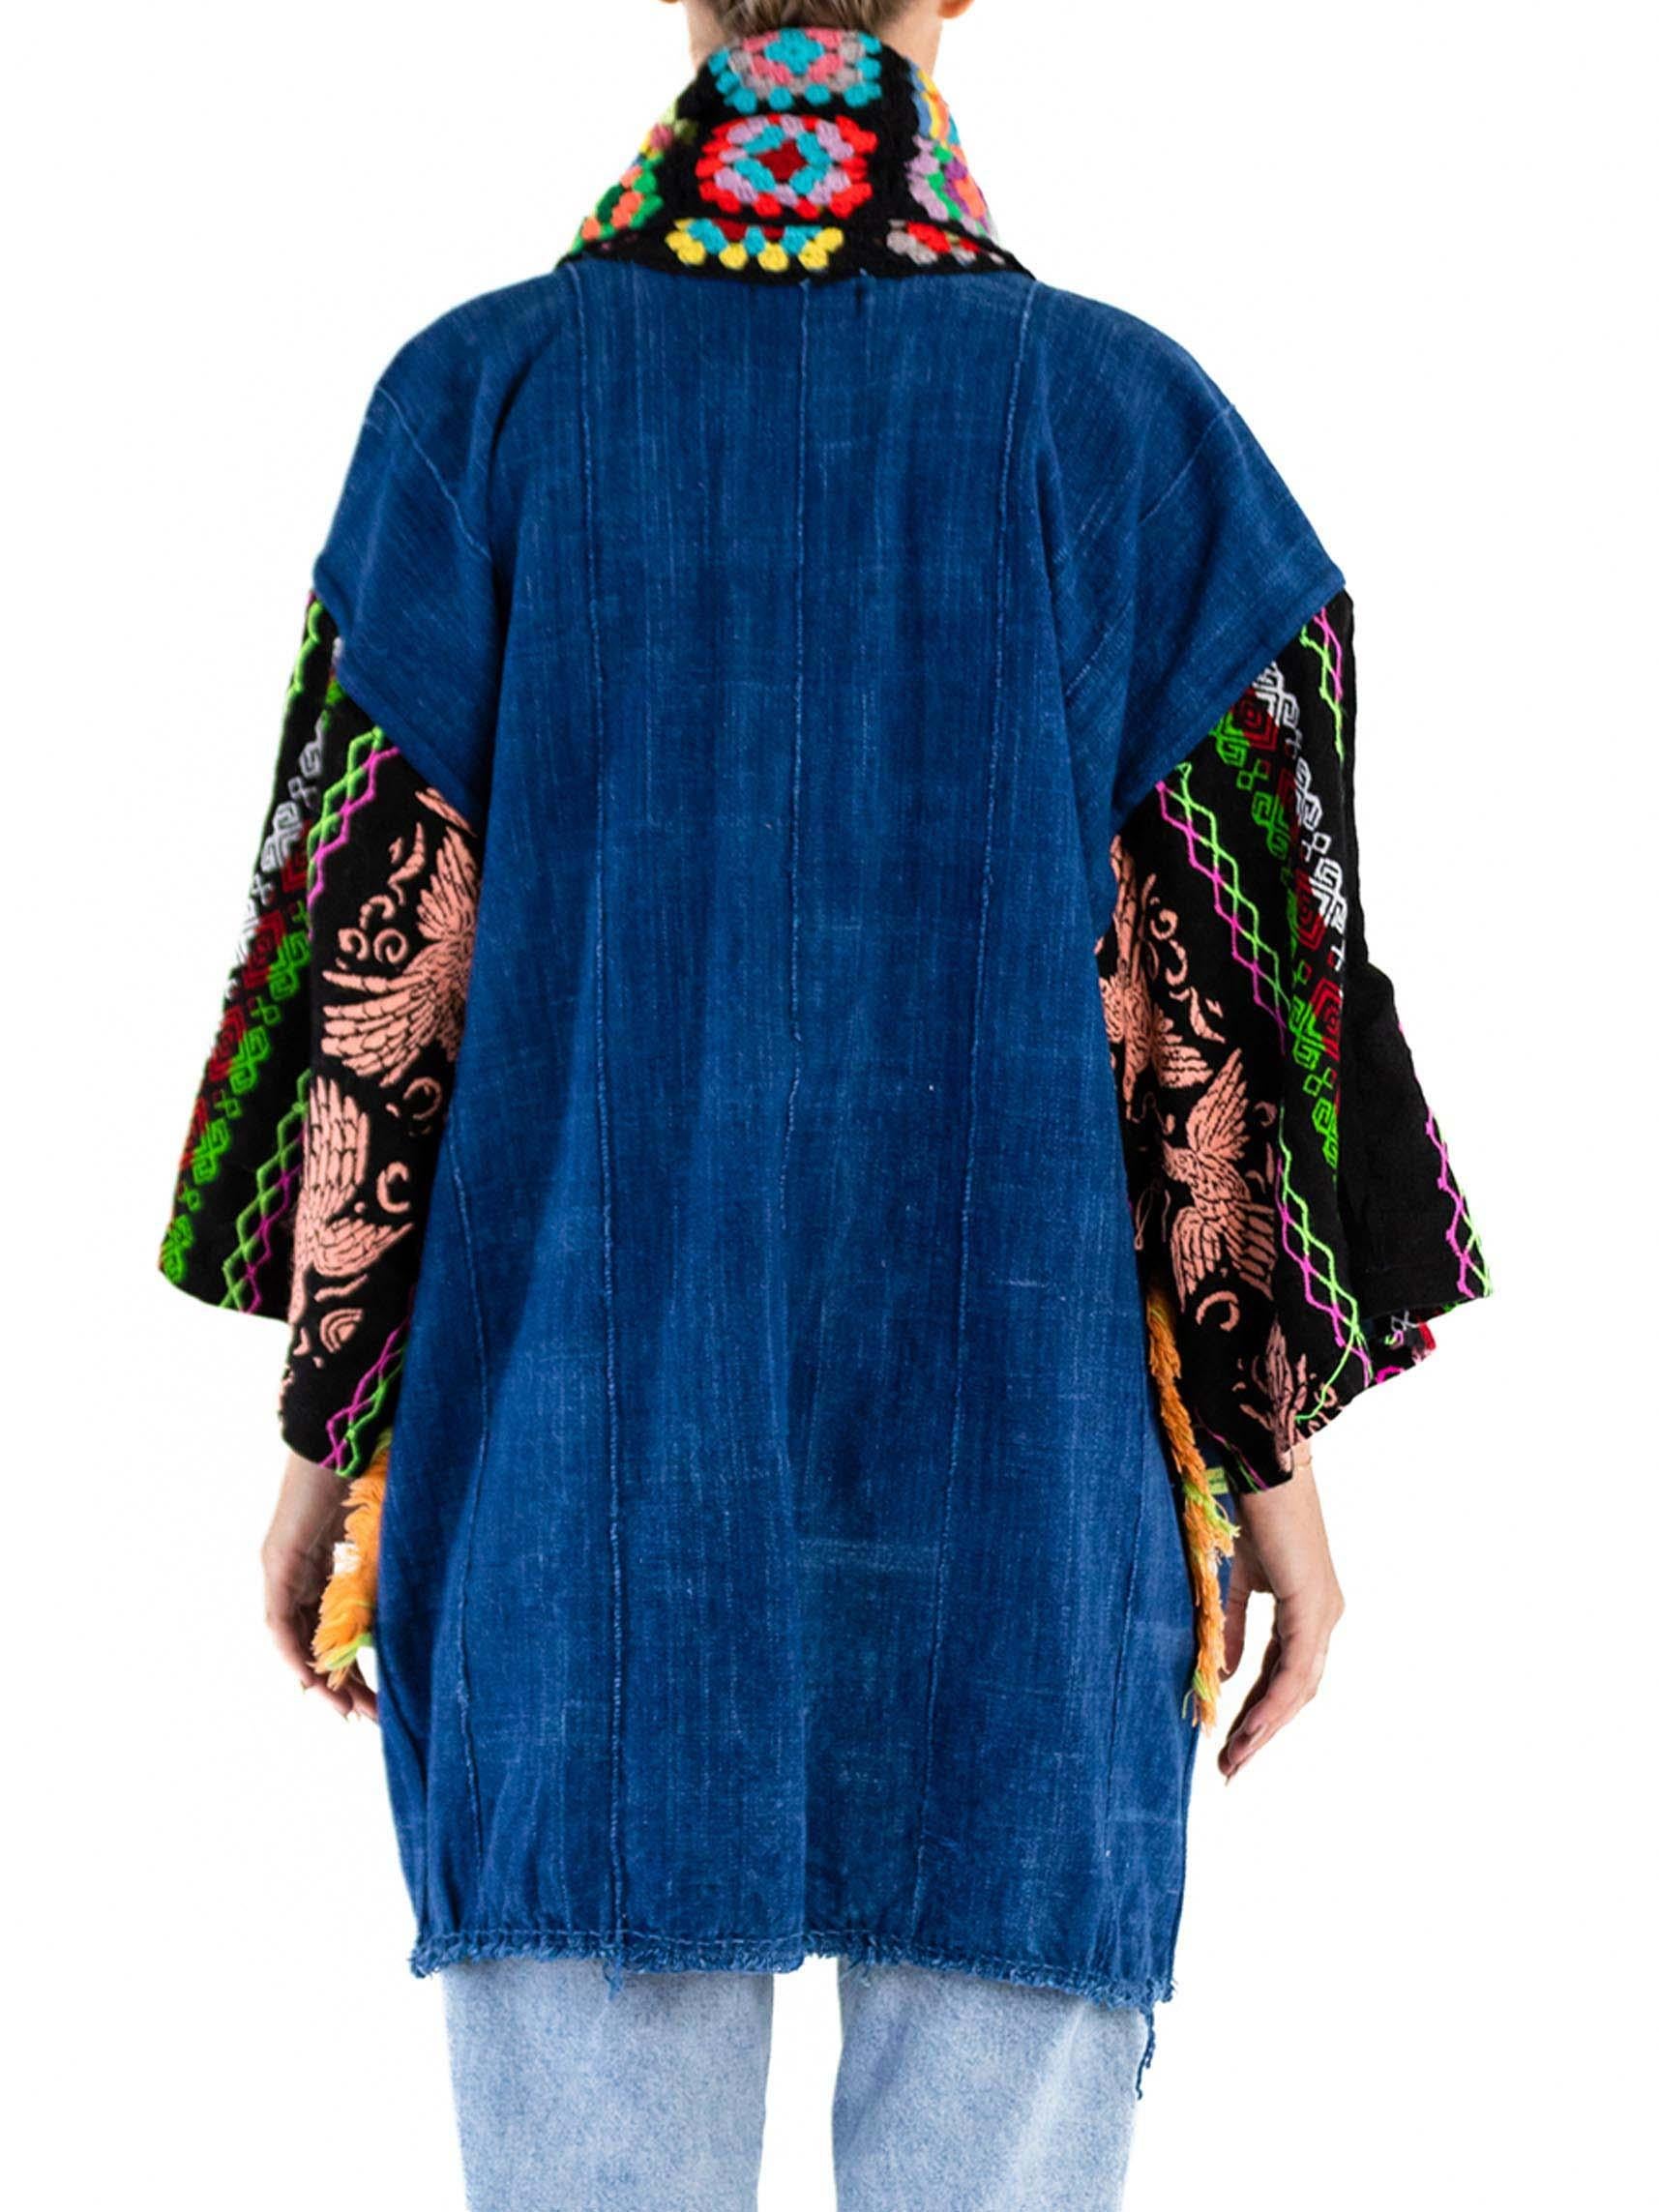 Morphew Collection West African Indigo Cotton Multi Color Crochet Trim Duster For Sale 6